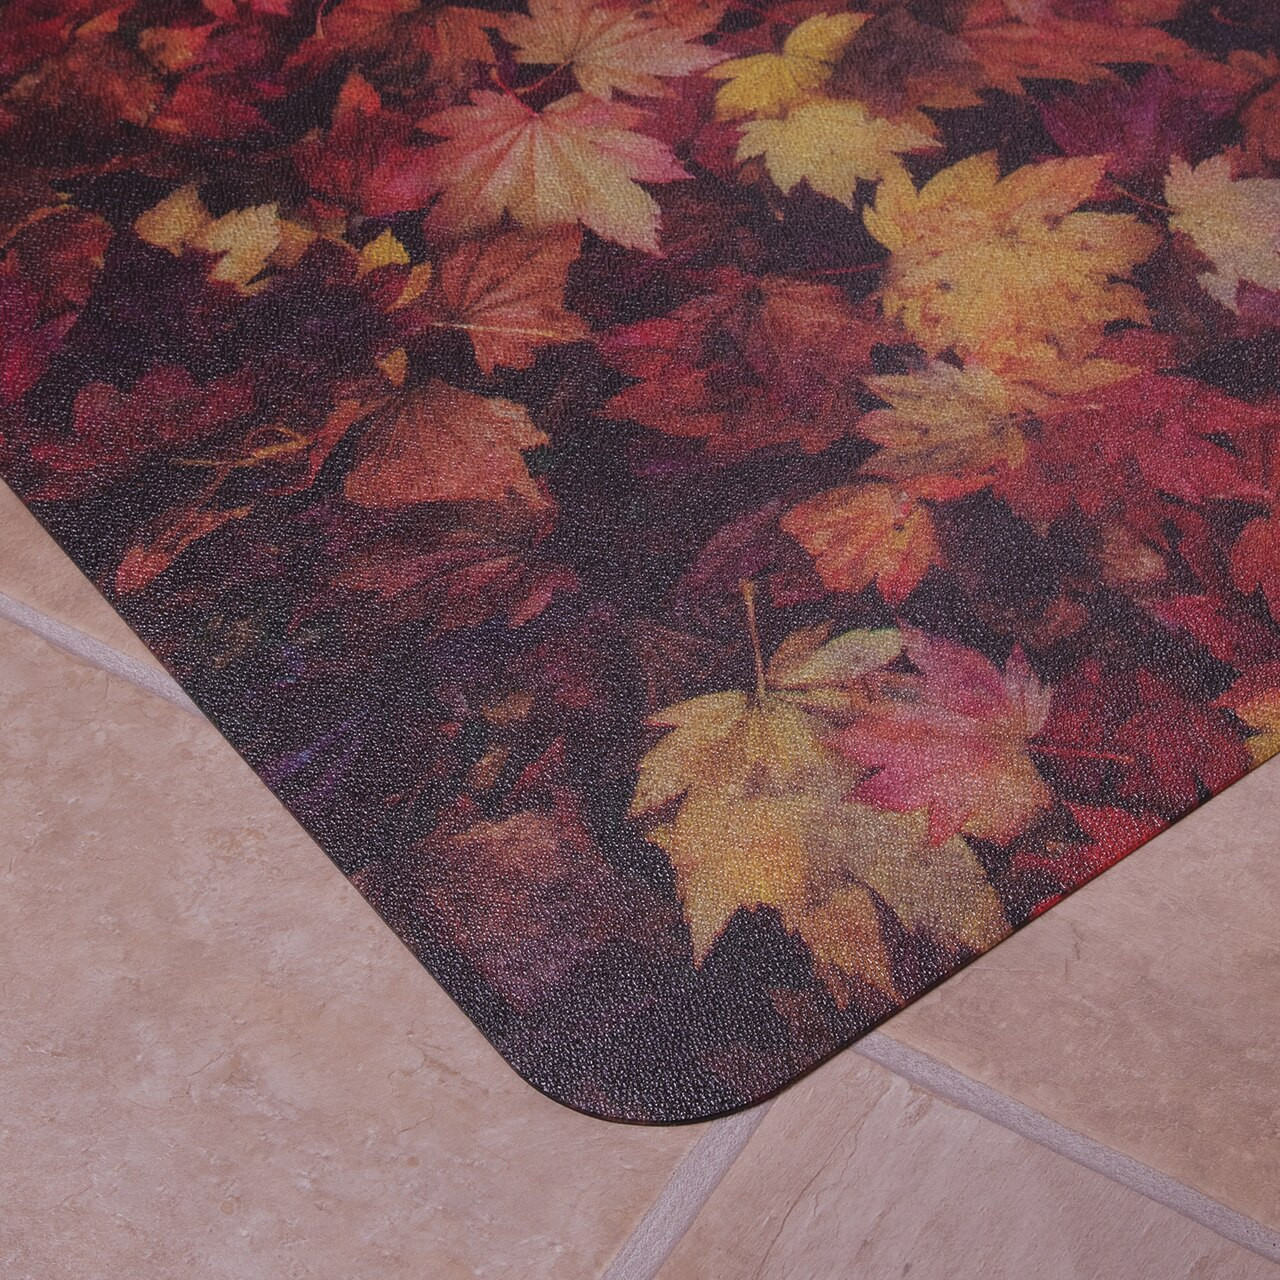 Colortex Photomat, Colorful General Purpose Floor Mat for Hard